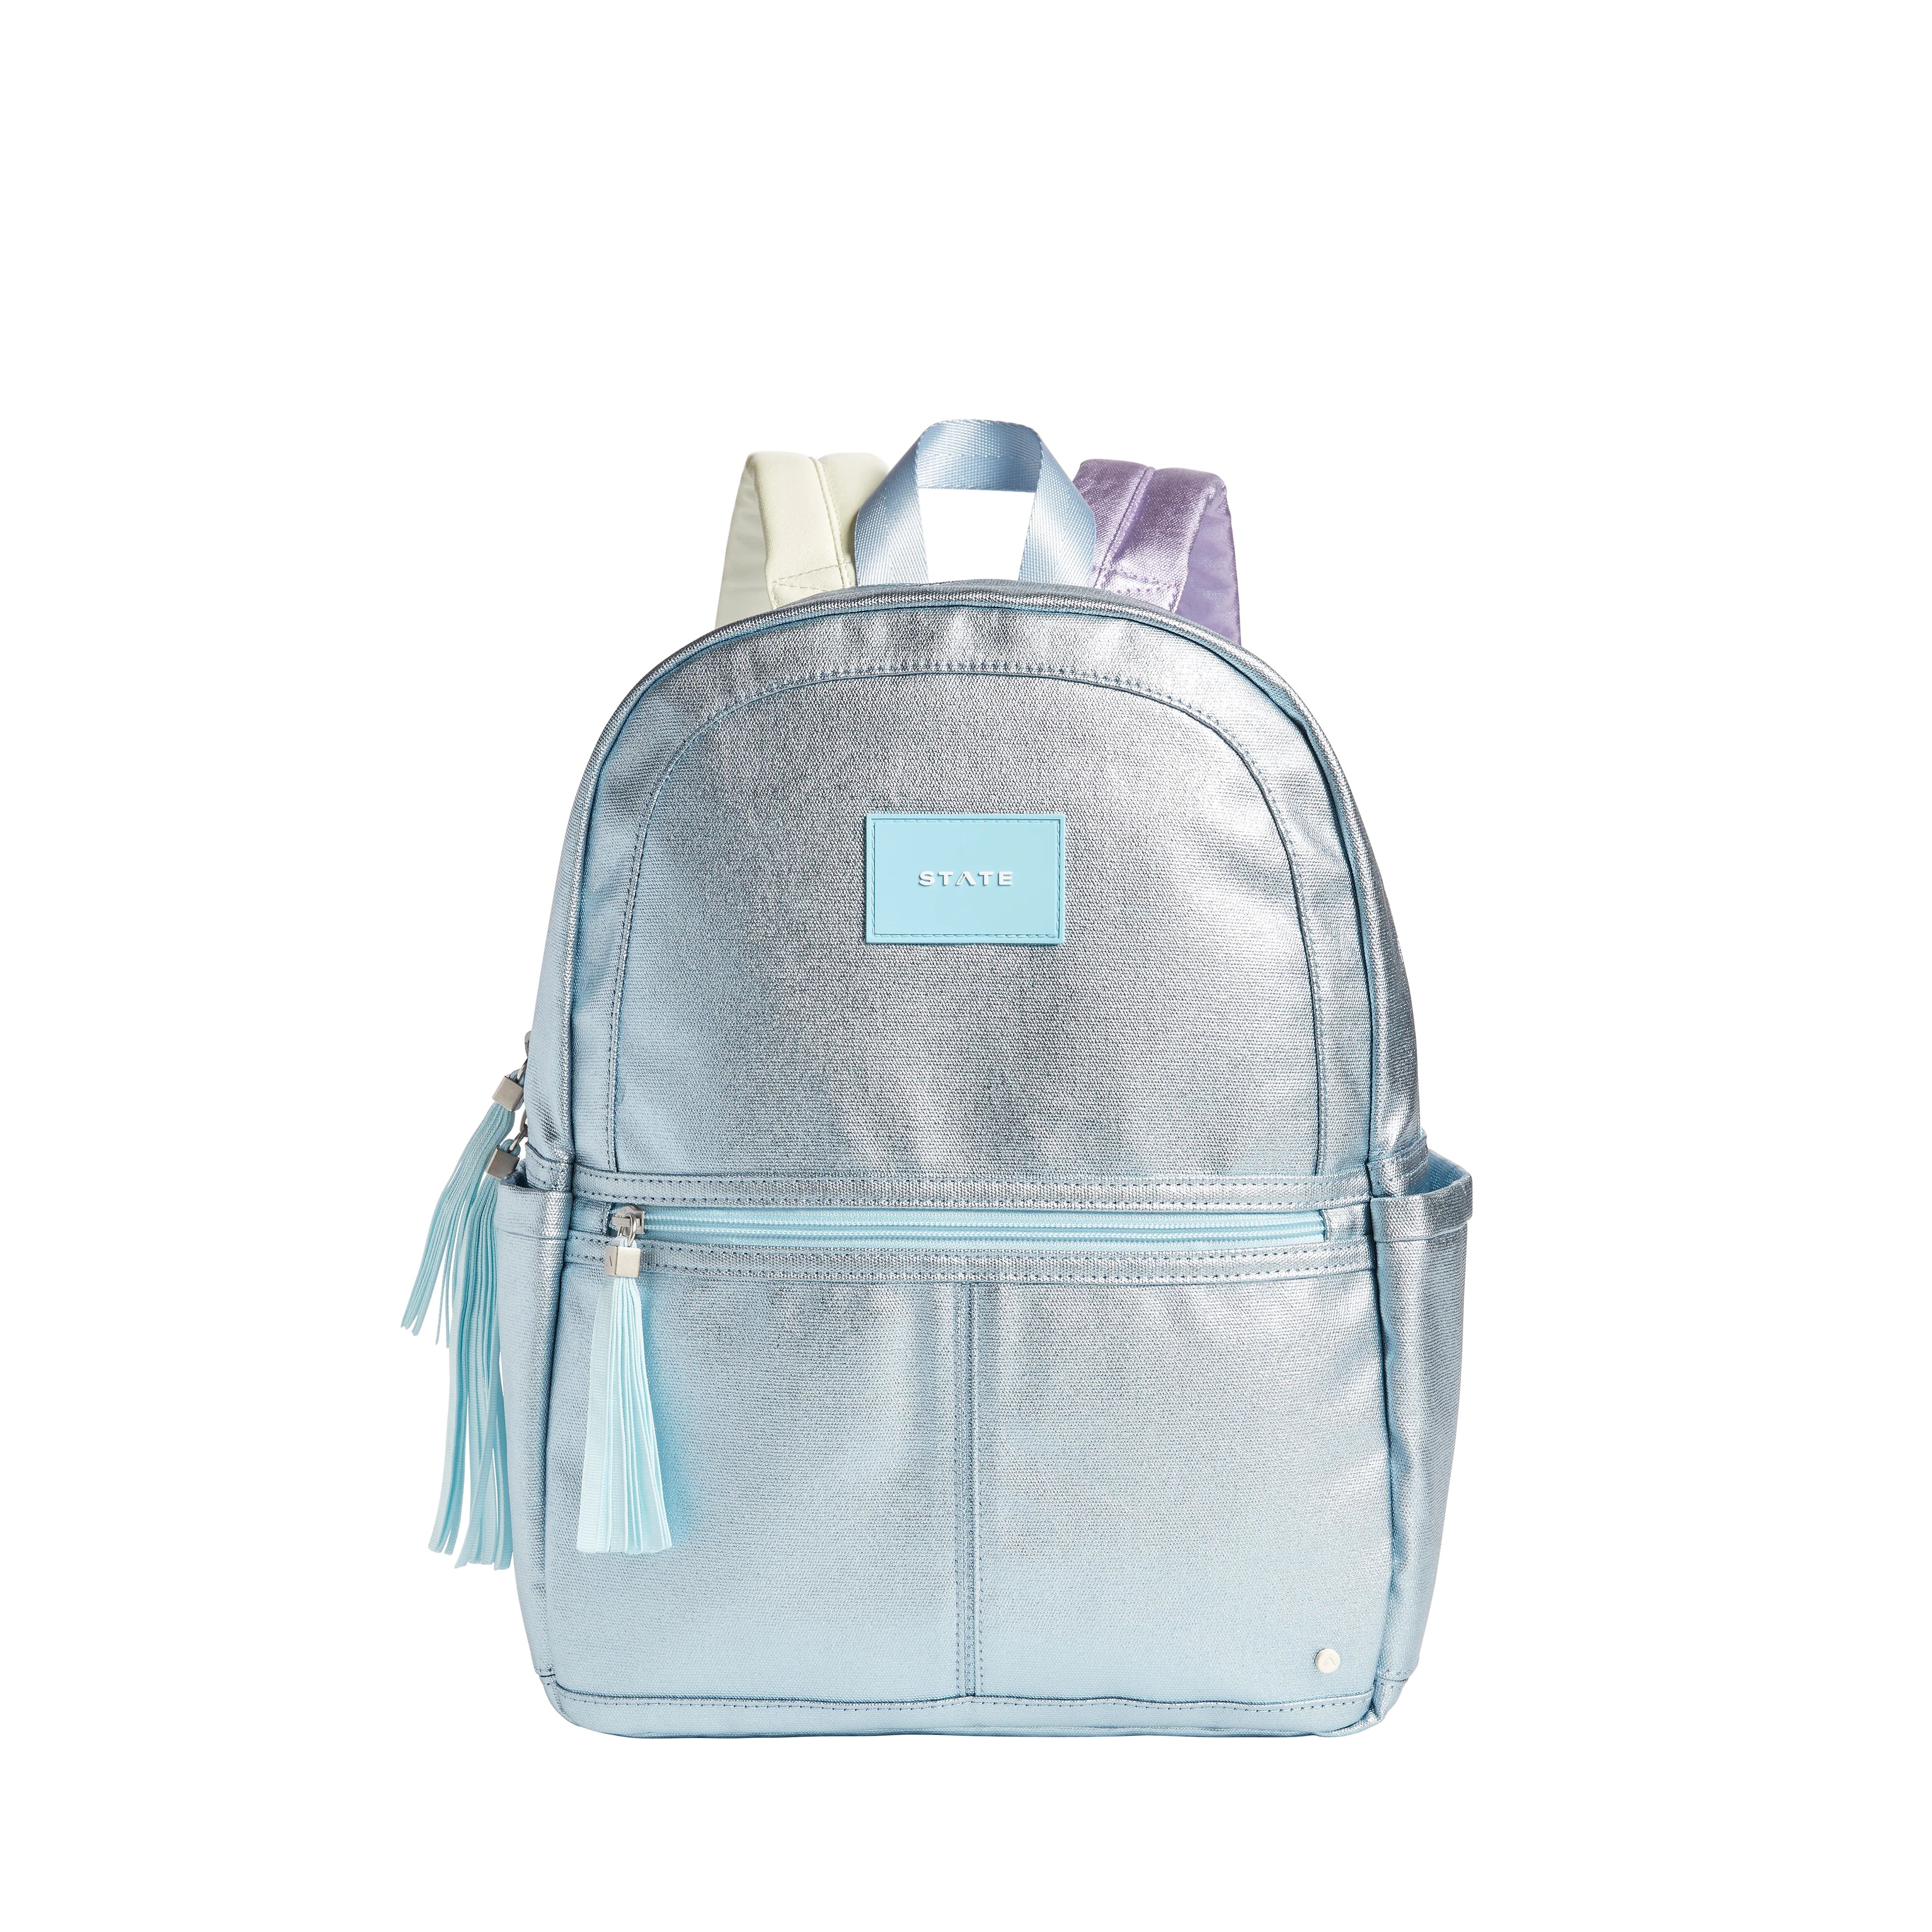 STATE Bags | Kane Kids Backpack Metallic Light Blue | STATE Bags